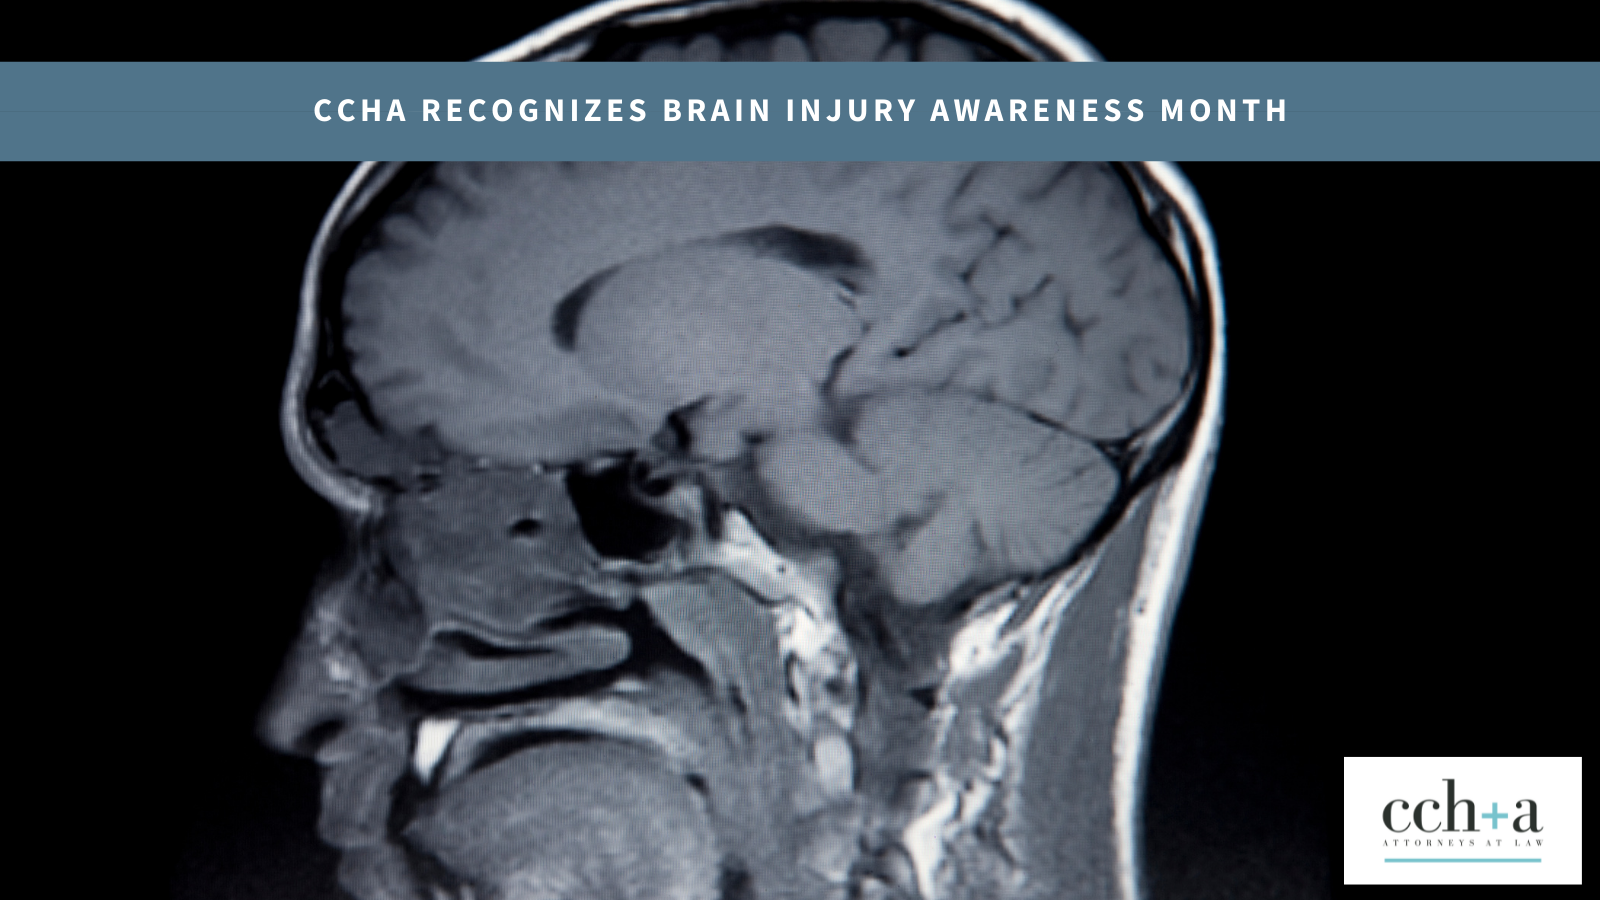 CCHA Brain Injury Awareness Month brain scan